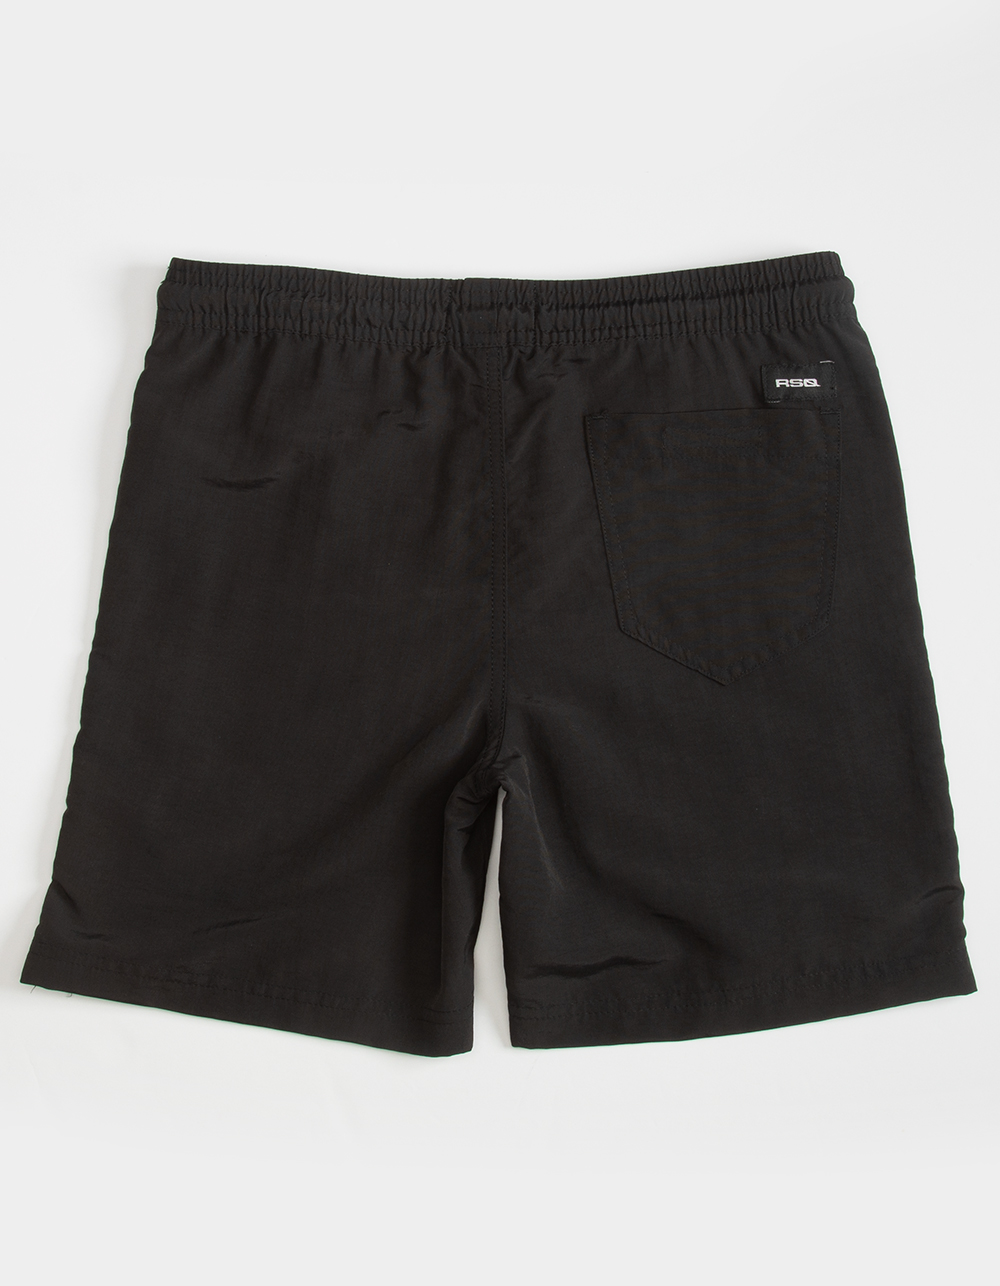 90% Nylon & 10% Spandex Black Color Boy Short Panties at Rs 70/set